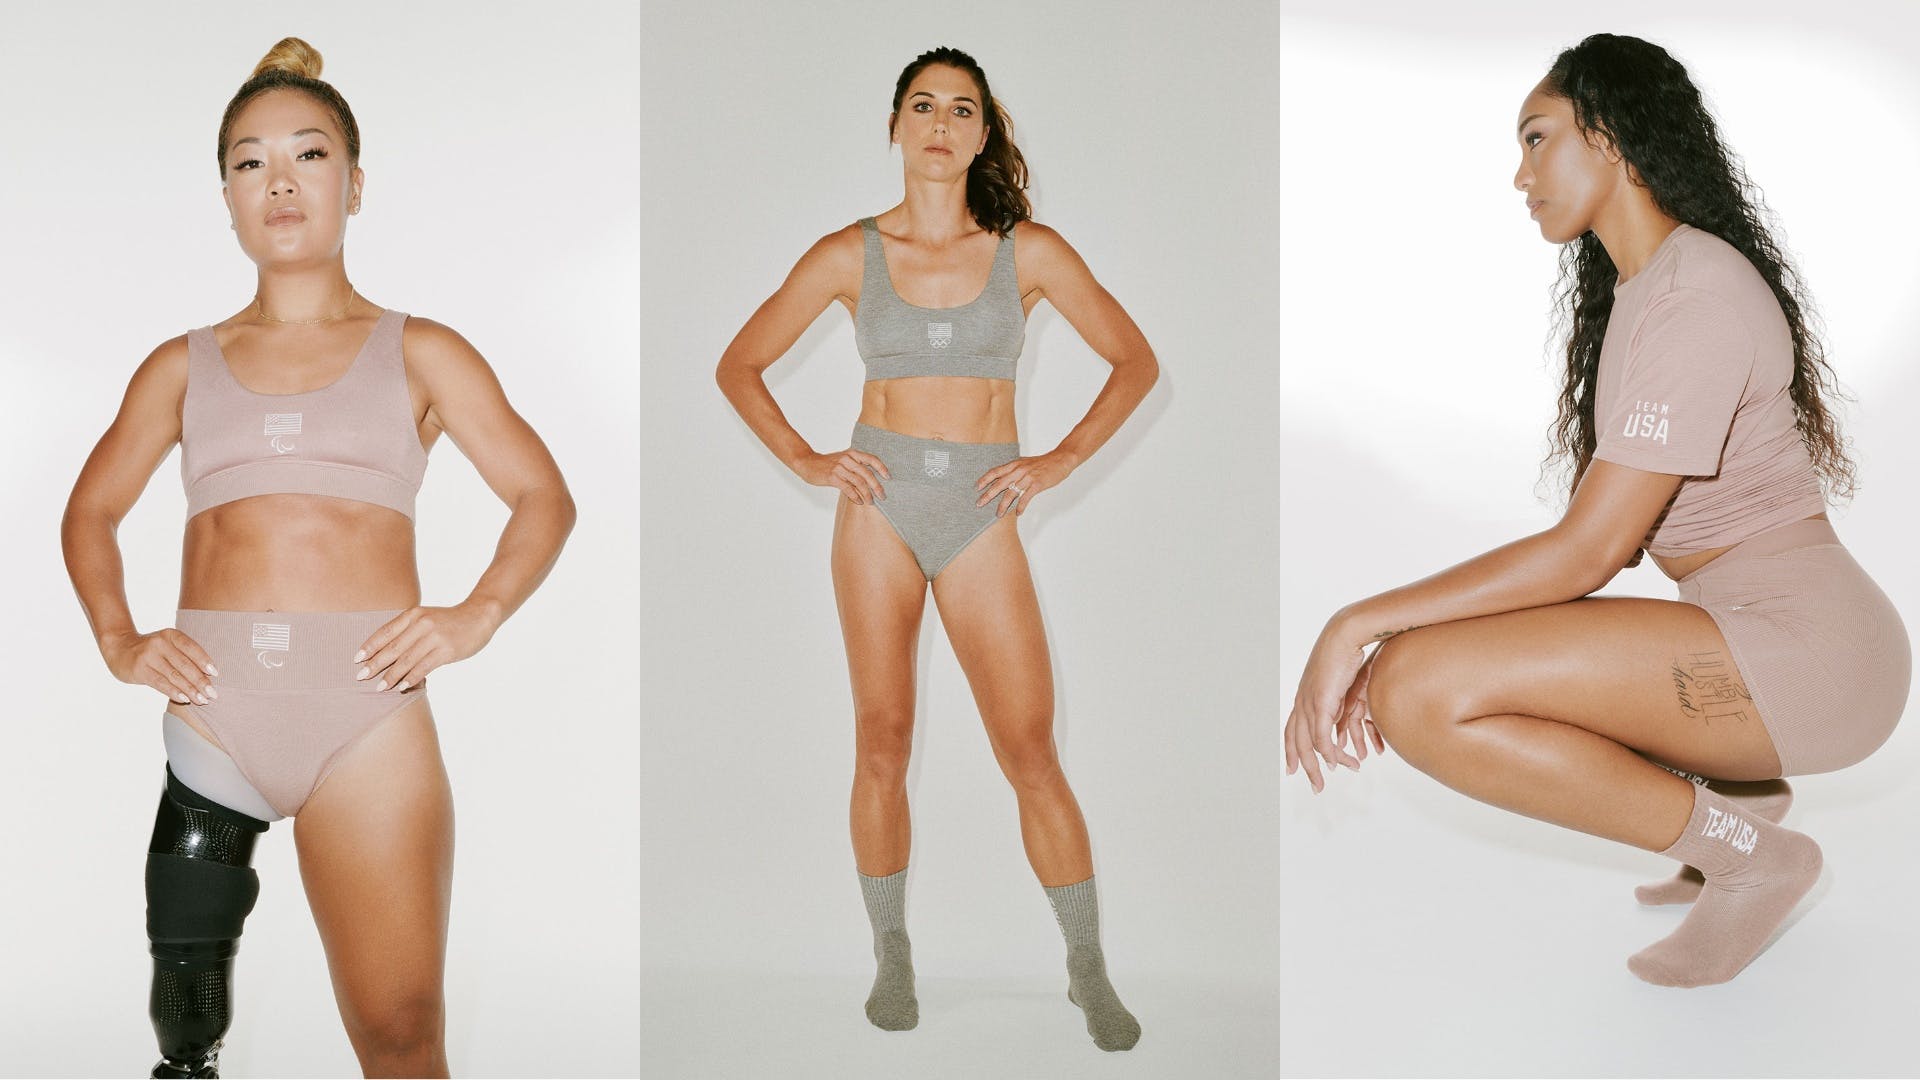 Tokyo Olympics: Kim Kardashian's Skims to supply undergarments for Team USA